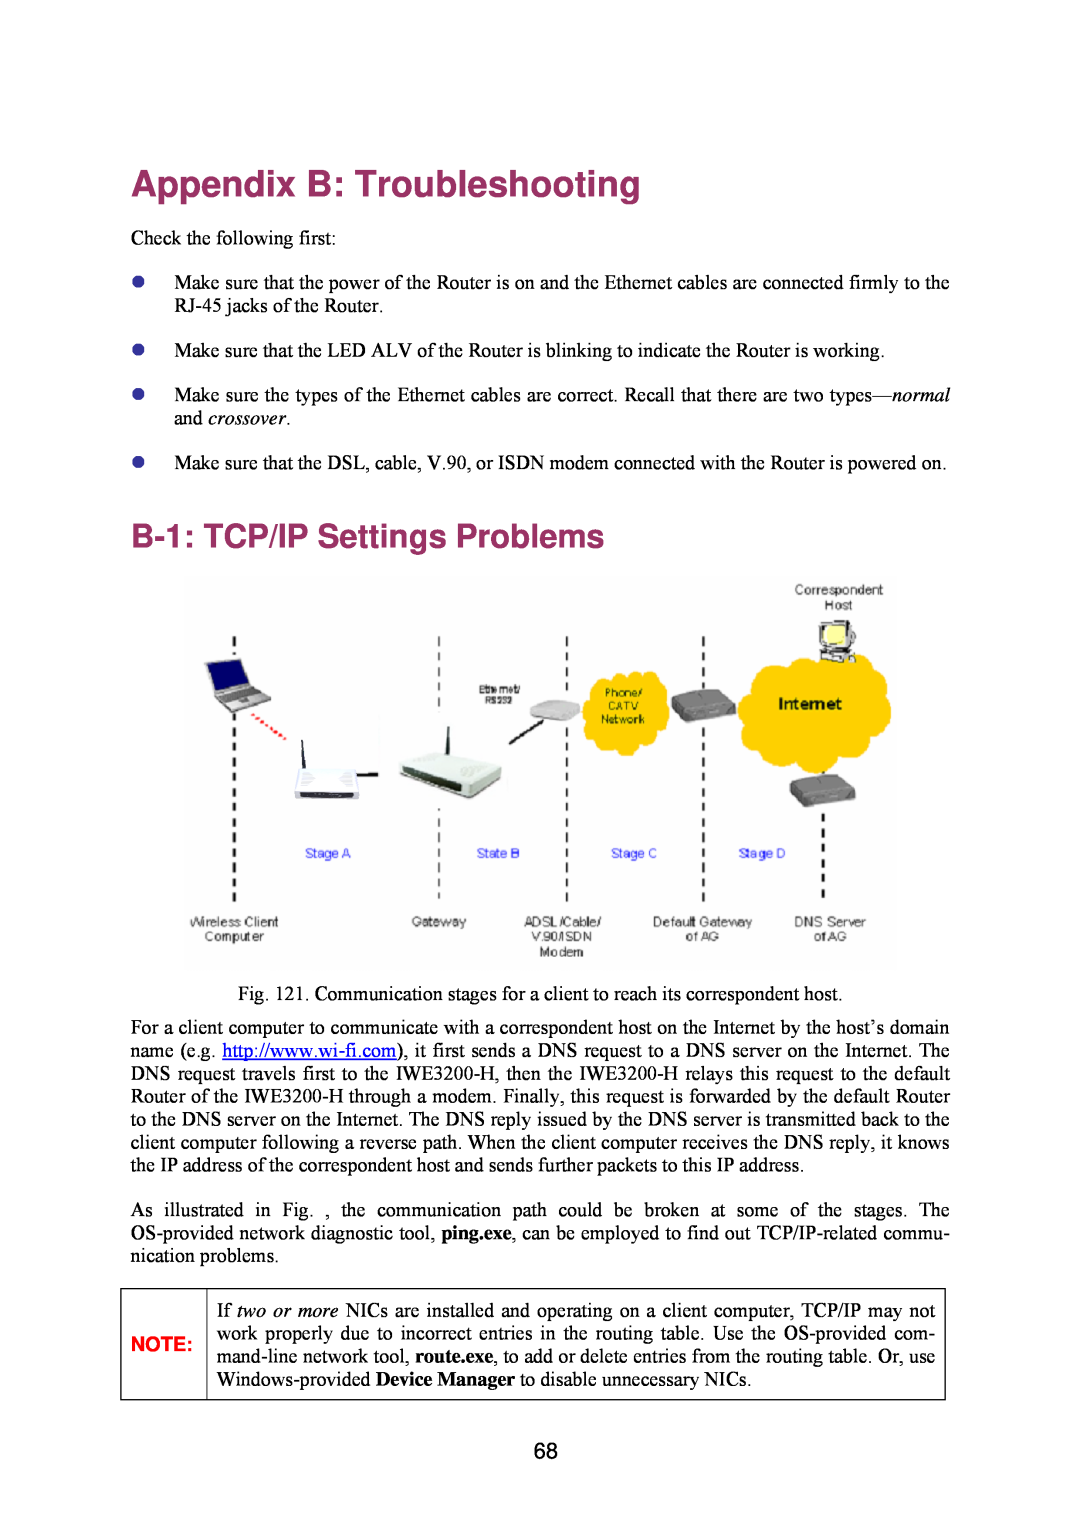 Epson IWE3200-H manual Appendix B: Troubleshooting, B-1:TCP/IP Settings Problems 